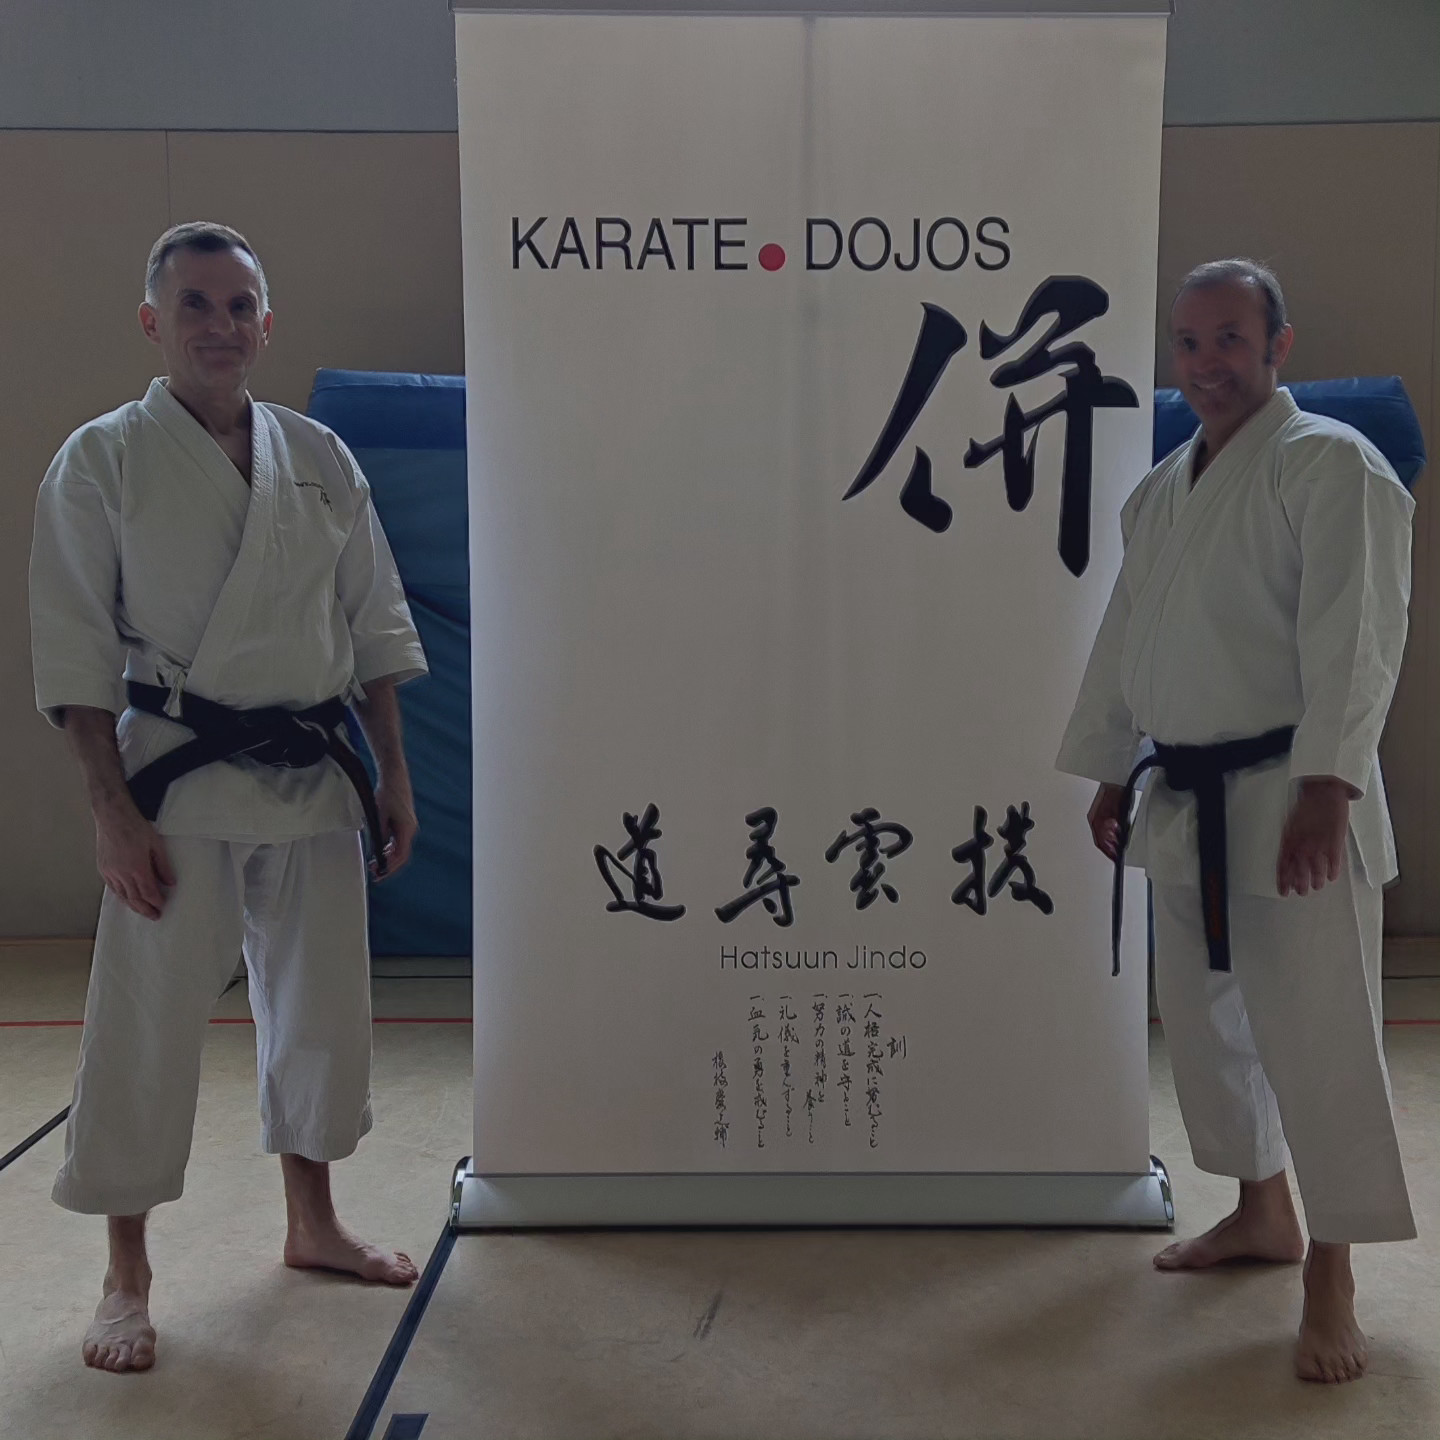 Karate der Spitzenklasse - Karate Dojos e.V.